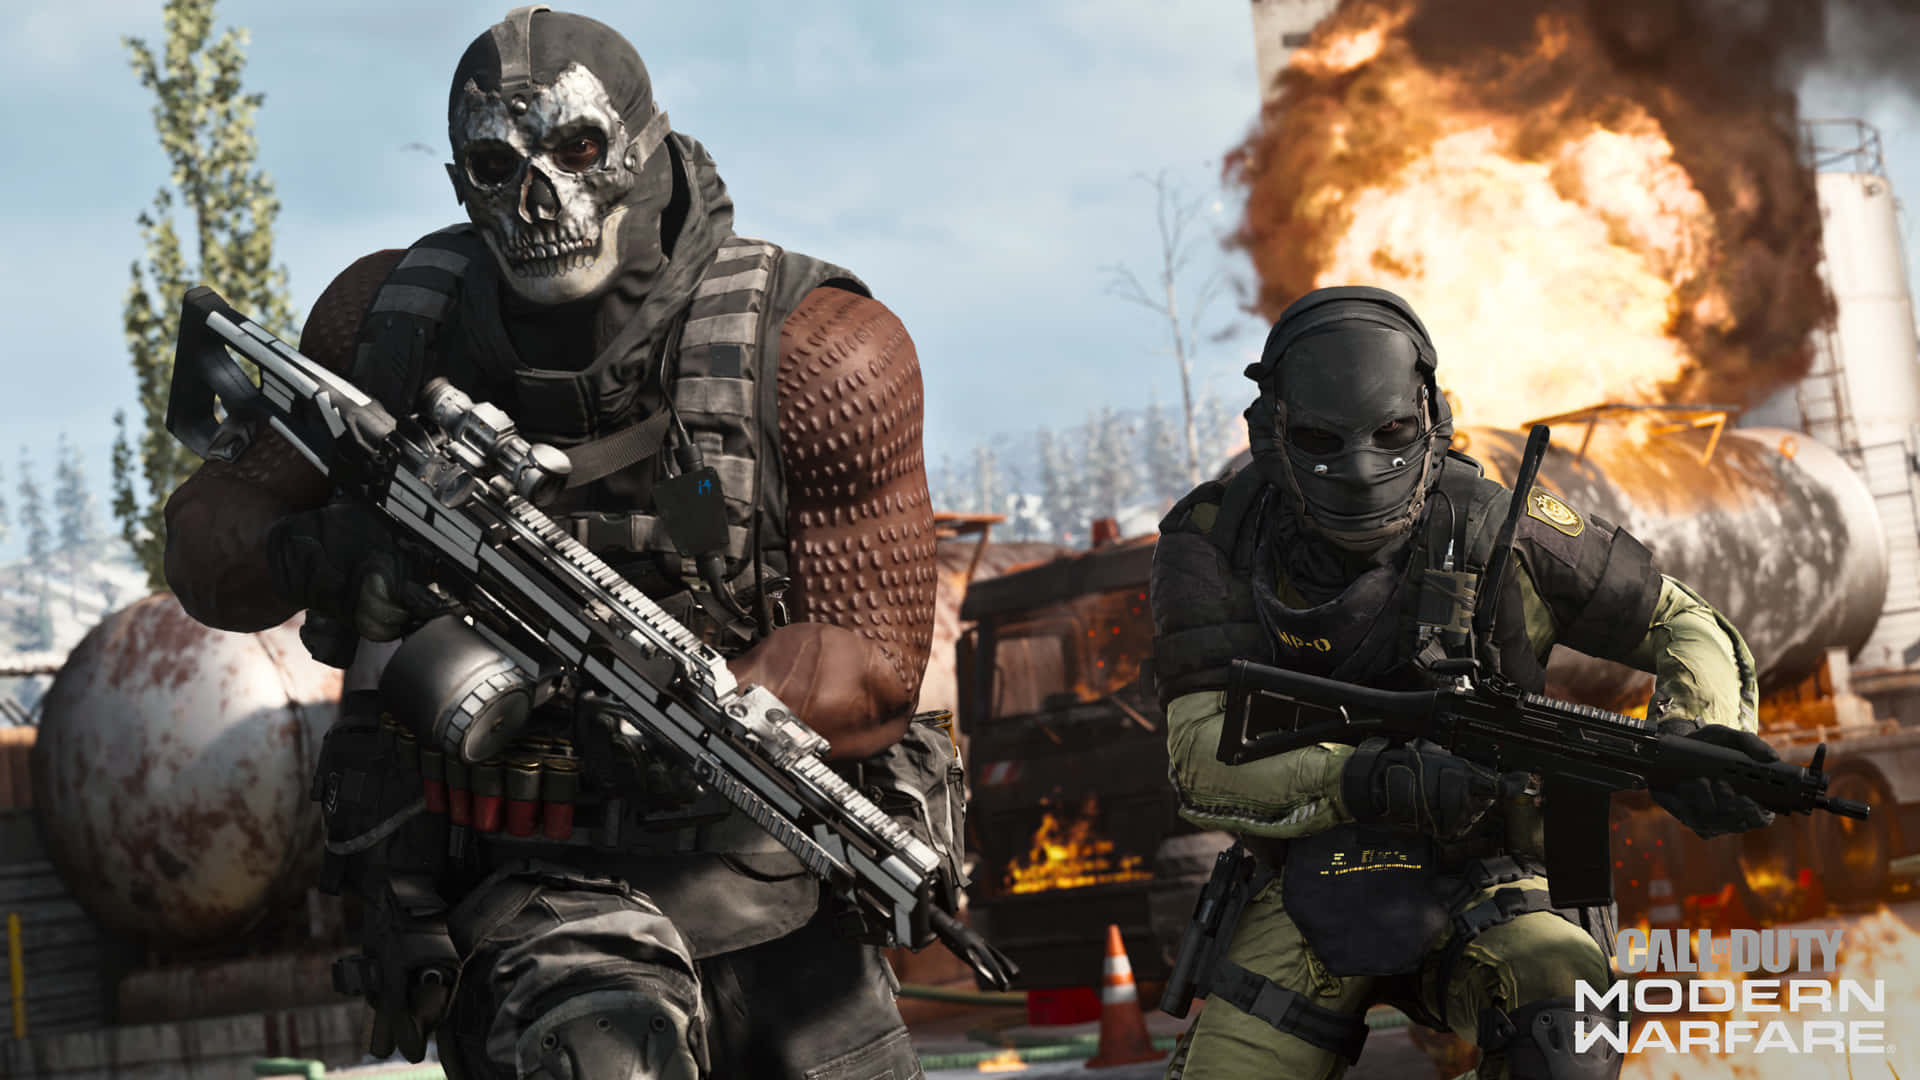 Tormentade Fuego Tronante De Acción En Call Of Duty Modern Warfare